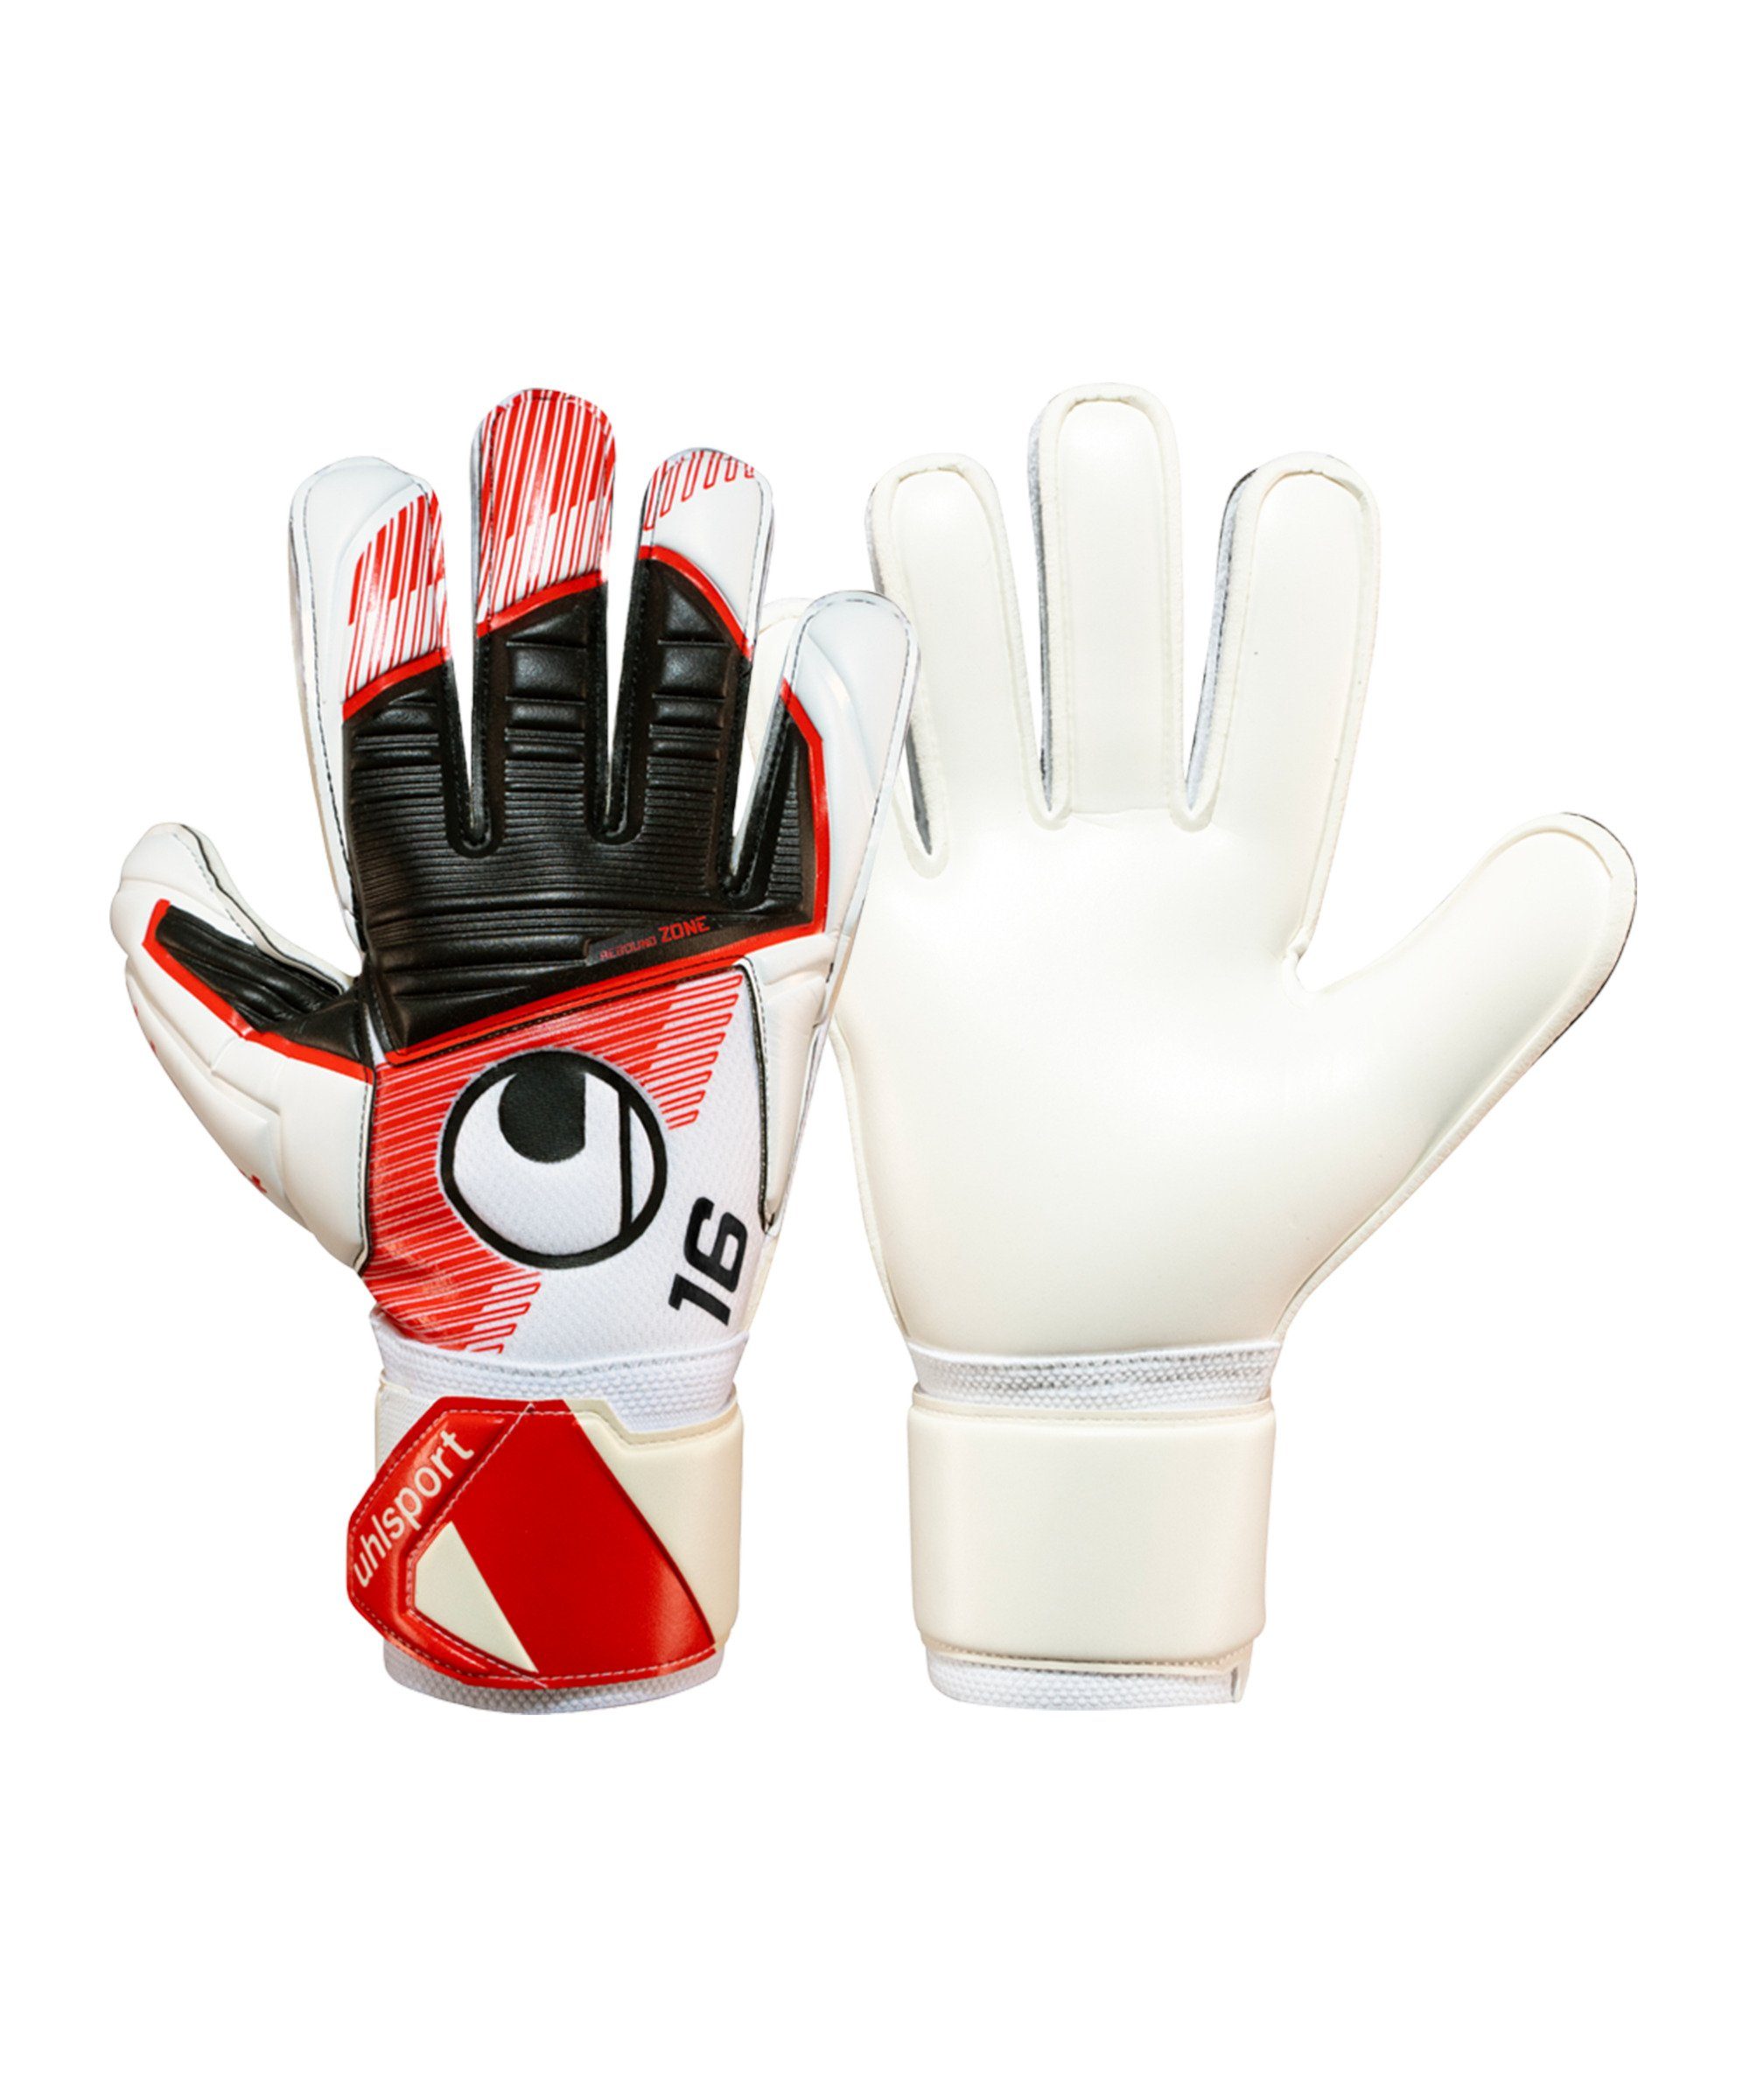 uhlsport Torwarthandschuhe Supersoft Maignan #344 TW-Handschuhe